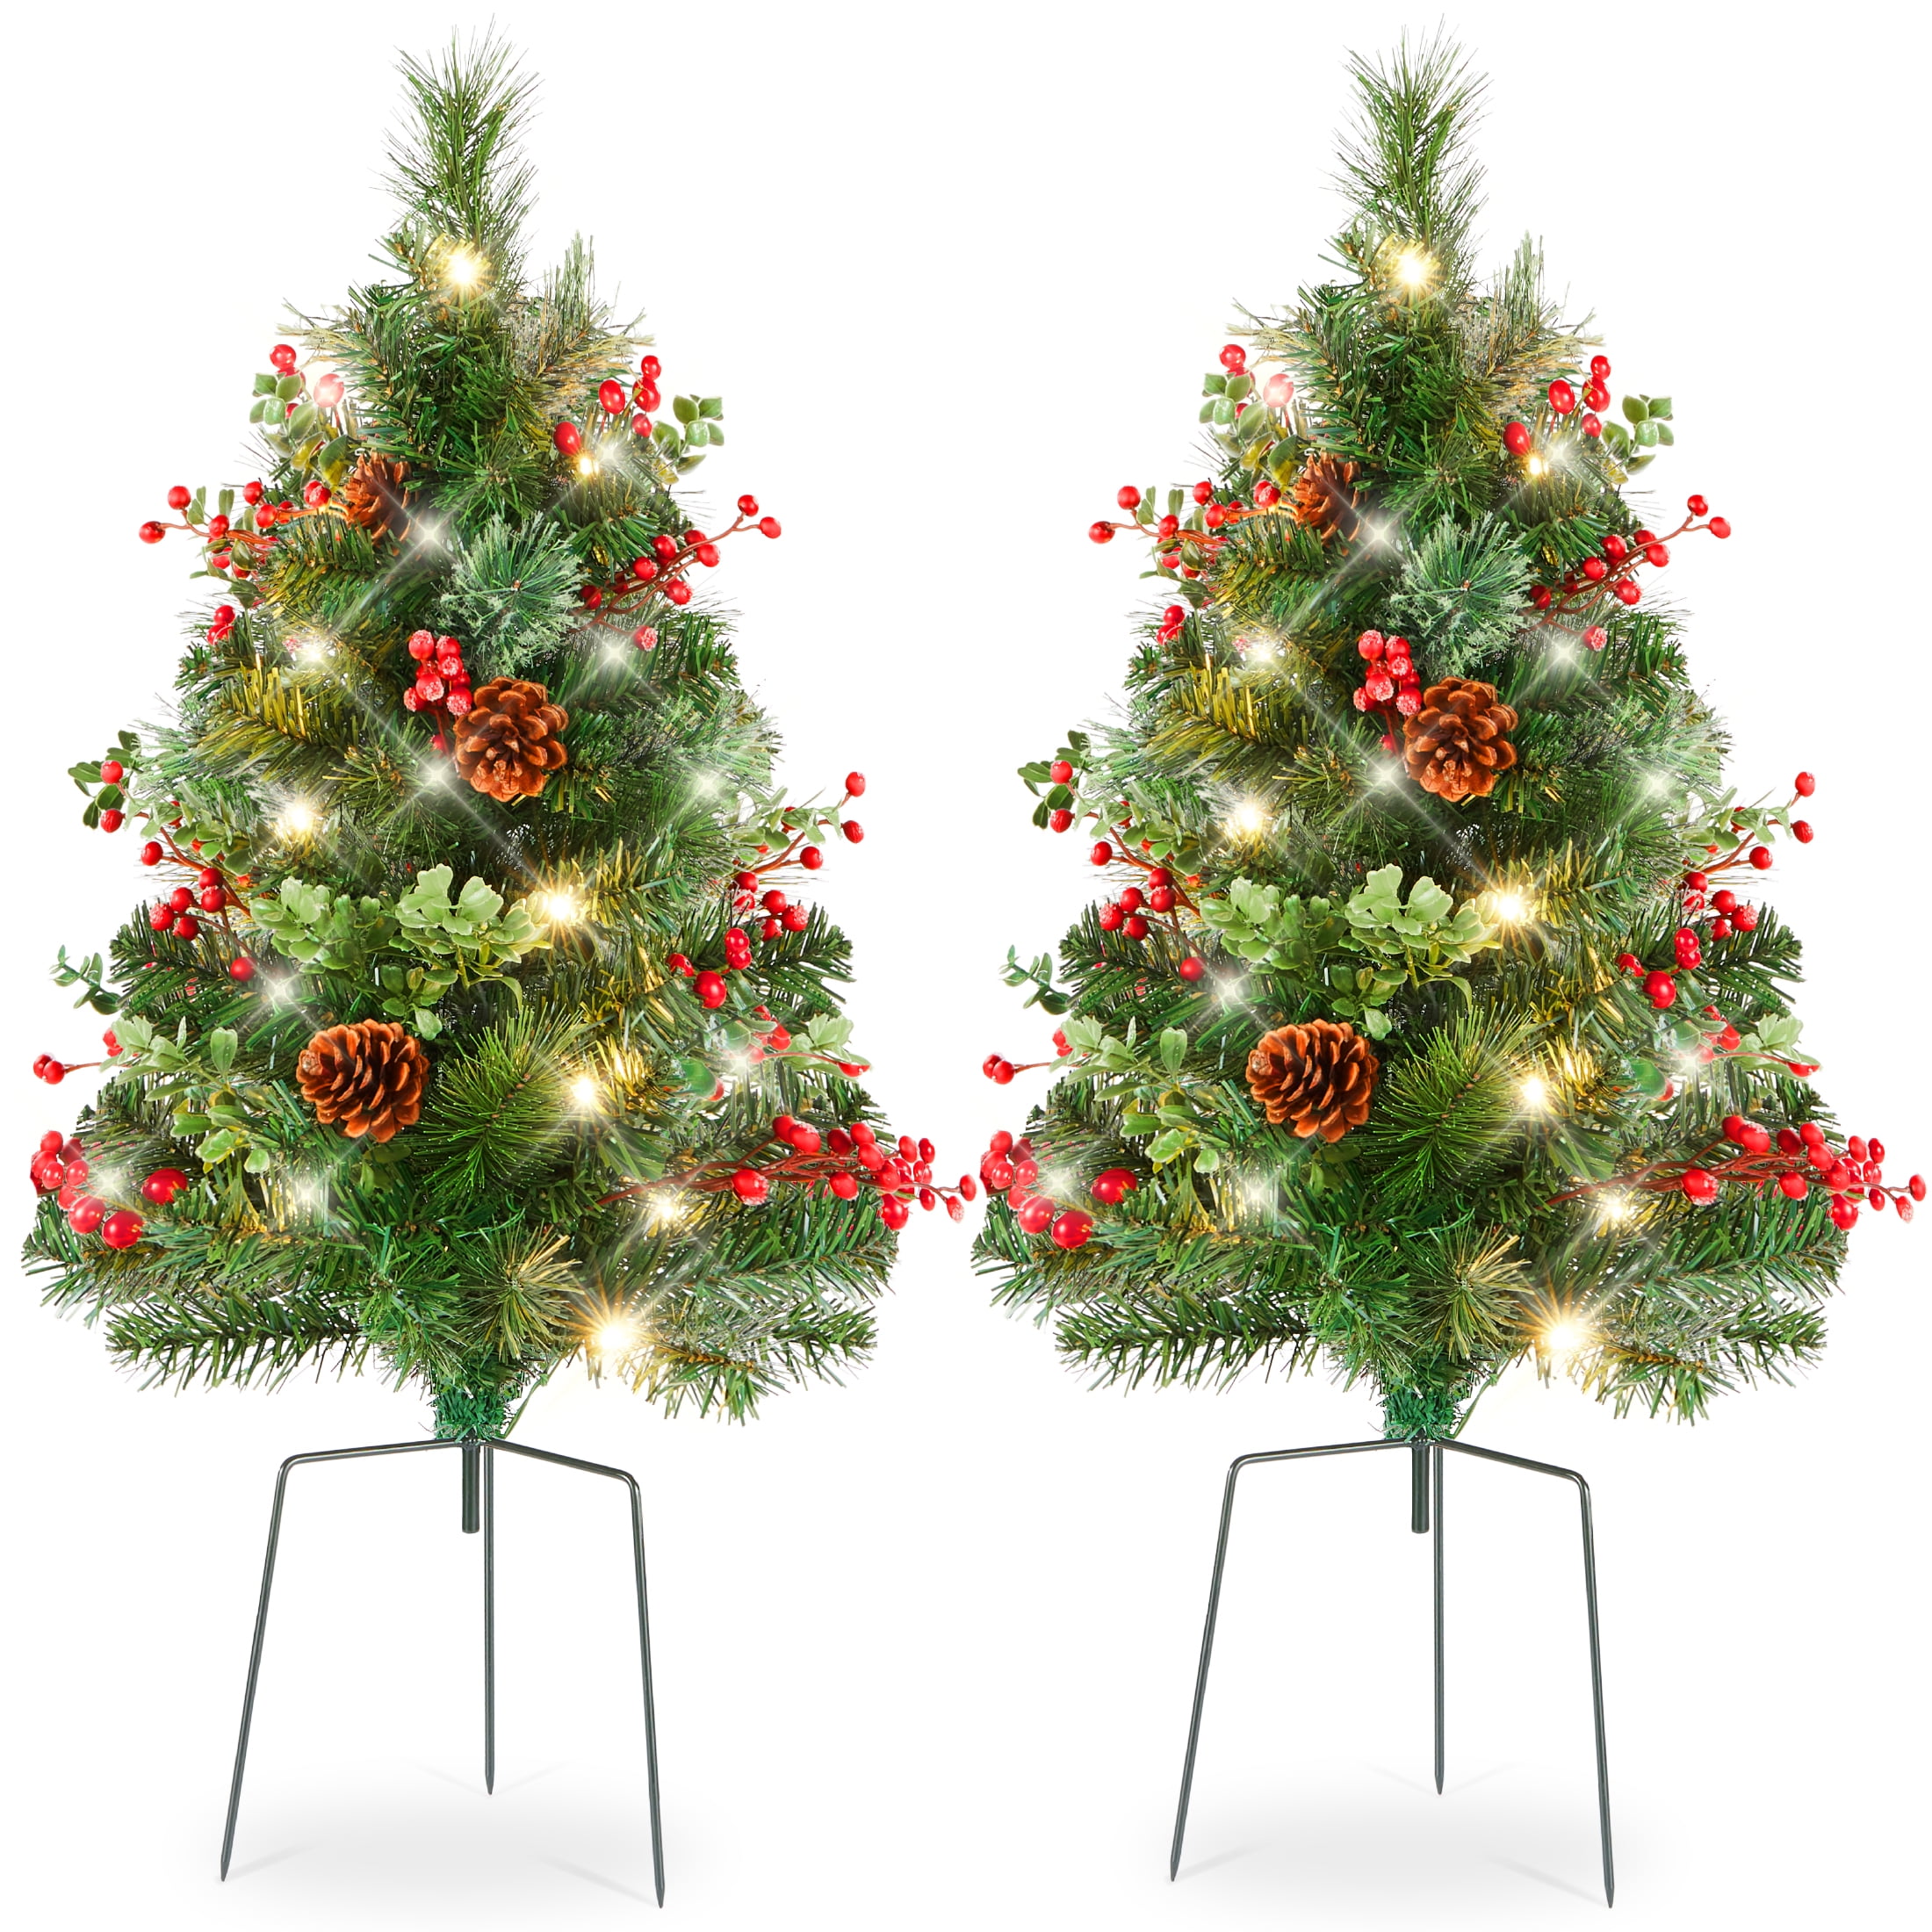 Mini Snow Christmas Tree Small Pine Trees For Home Supplies Xmas Decor J 